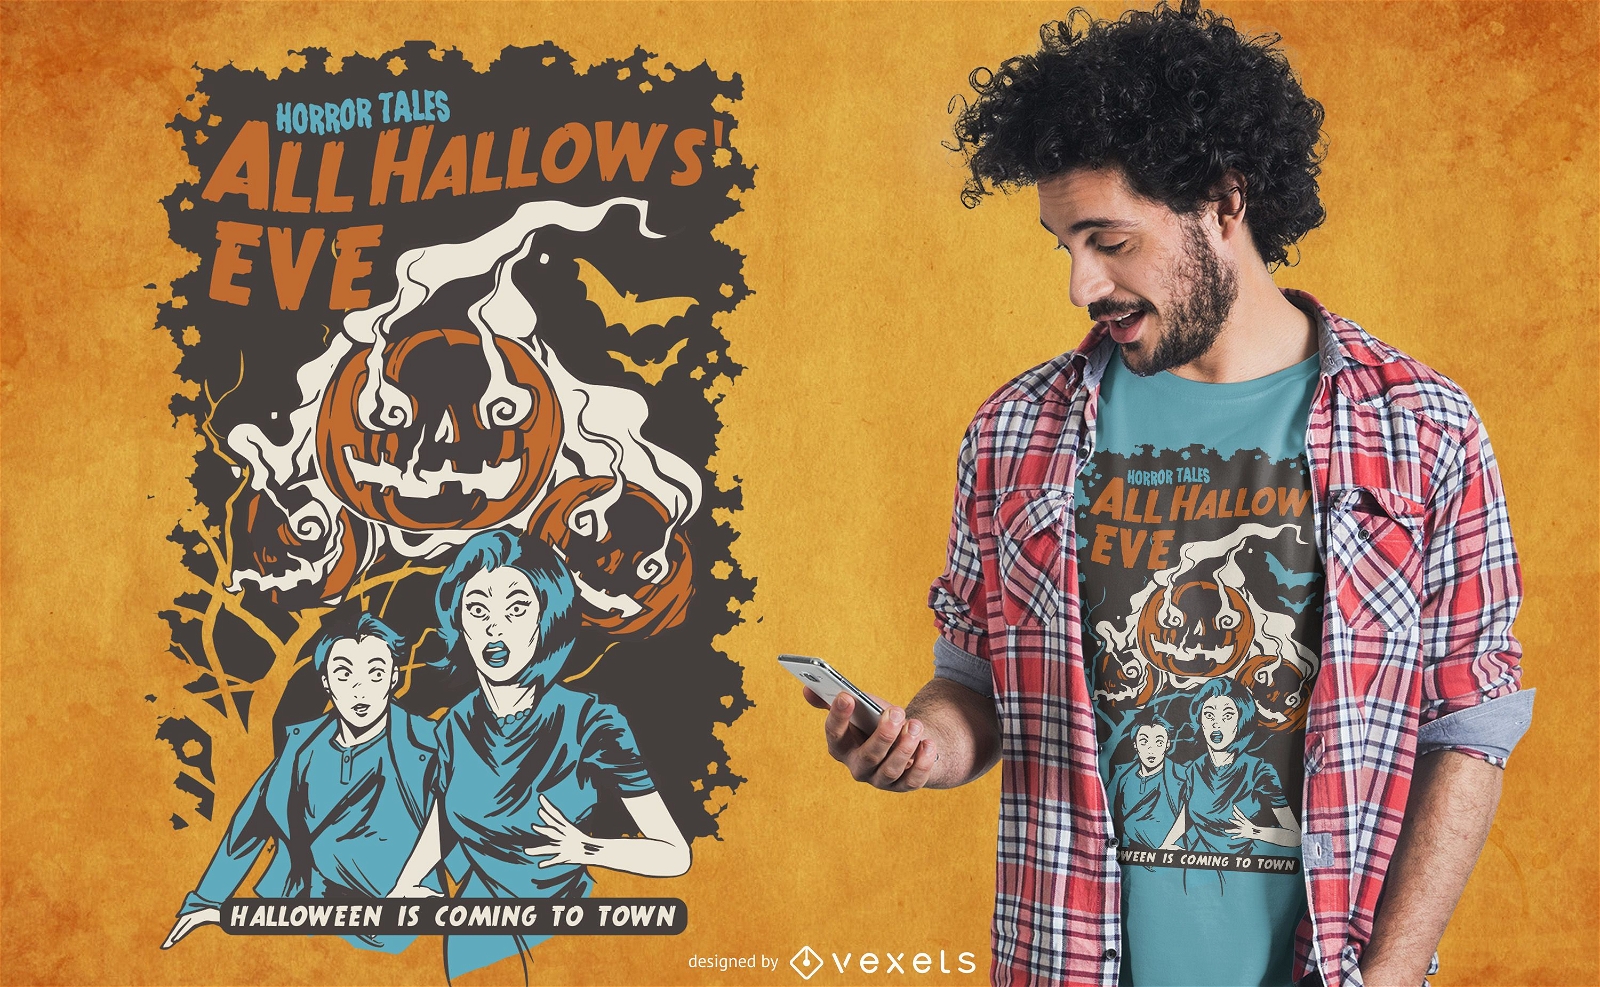 All hallows' eve t-shirt design